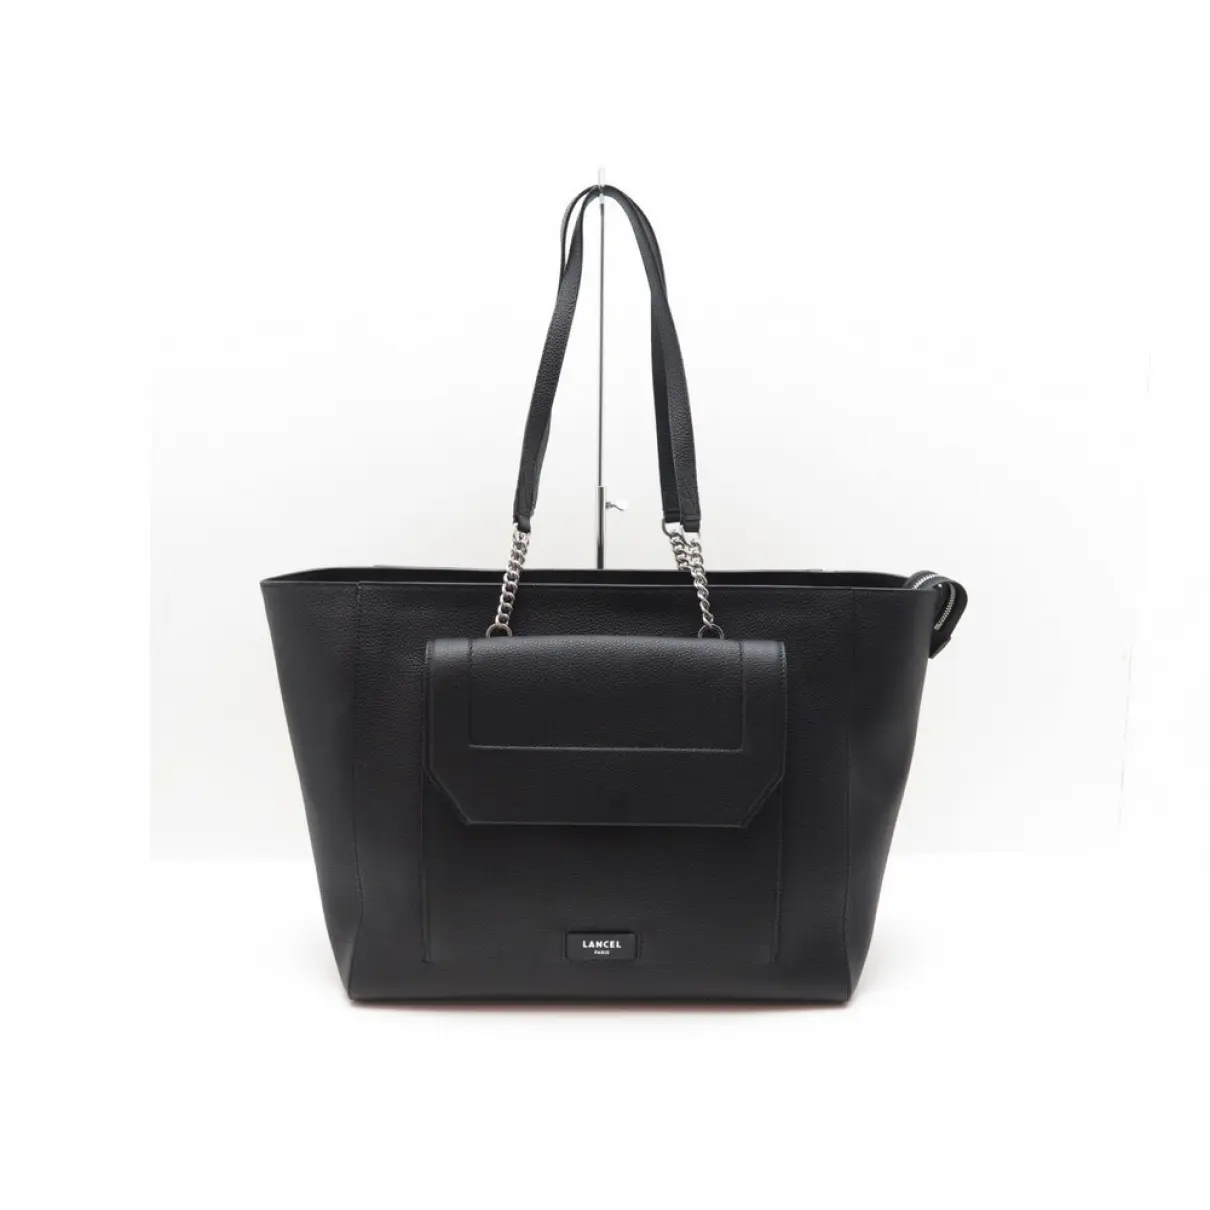 Buy Lancel Ninon leather handbag online